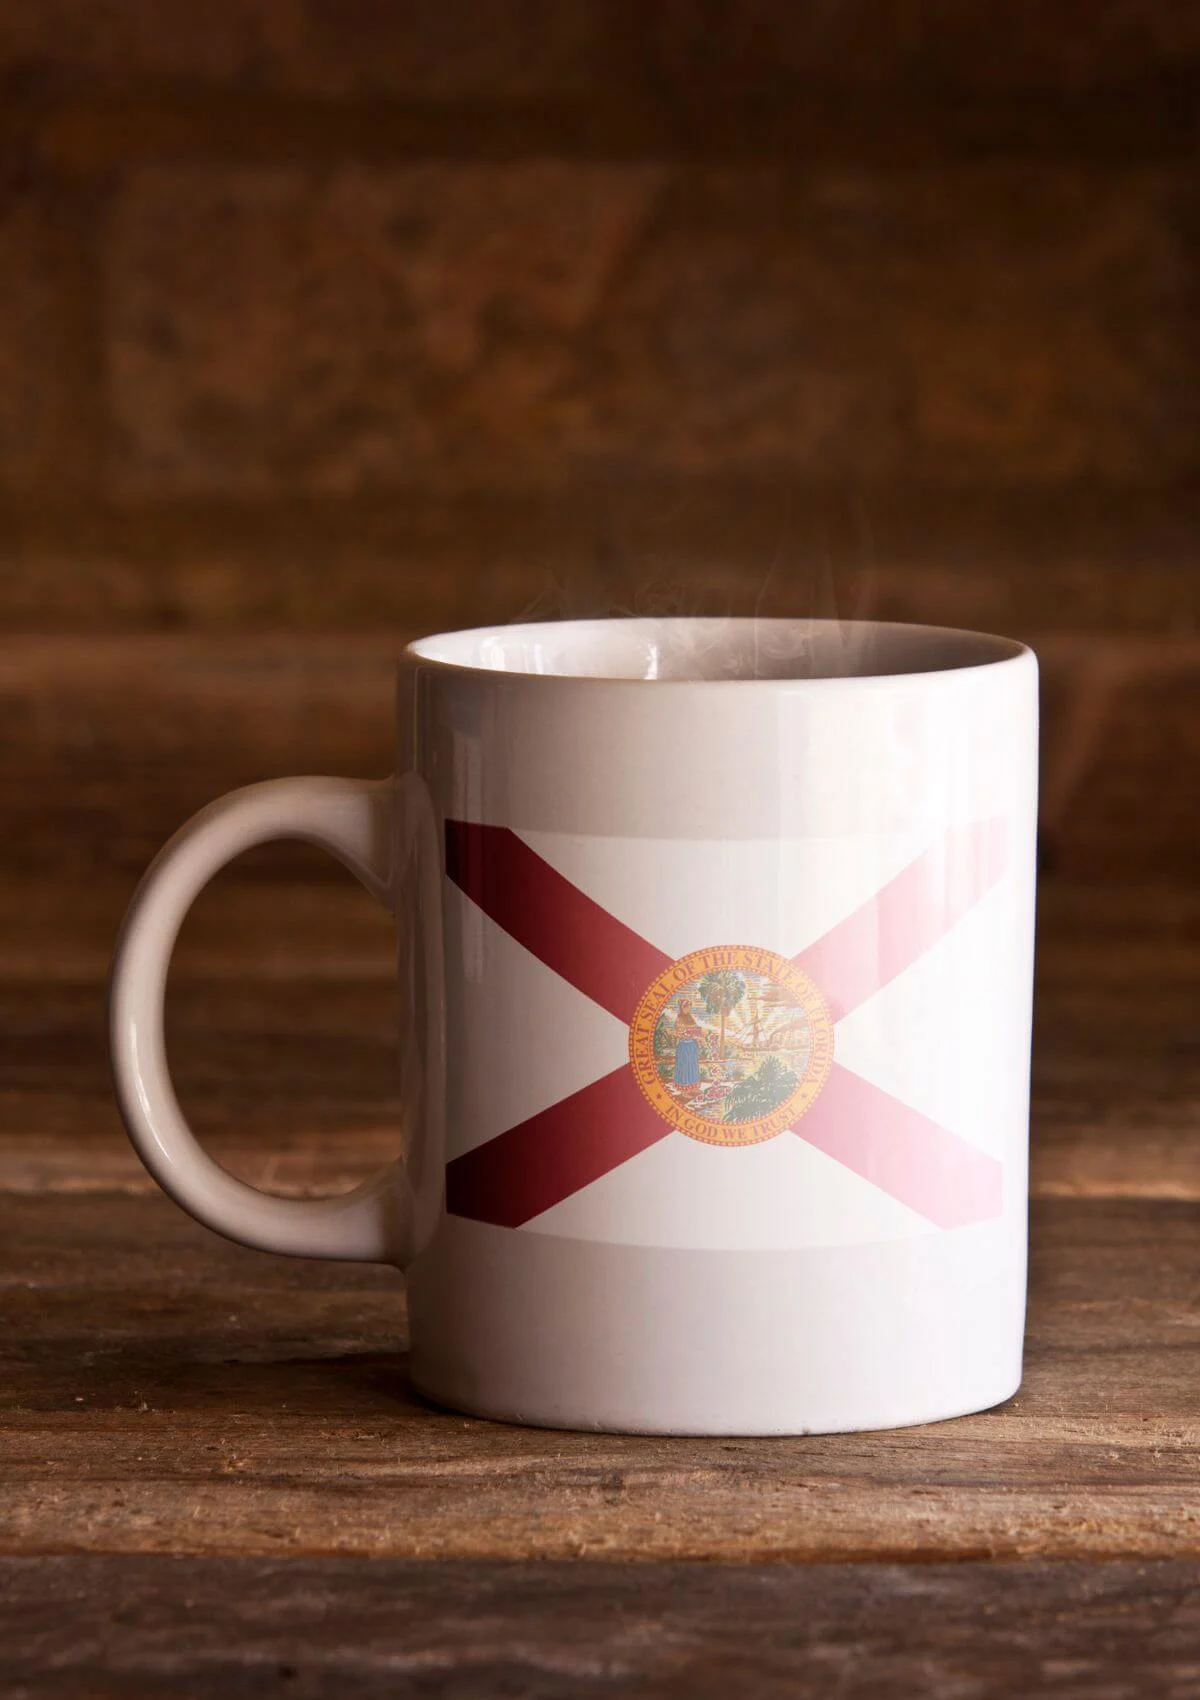 Mug souvenir from Florida